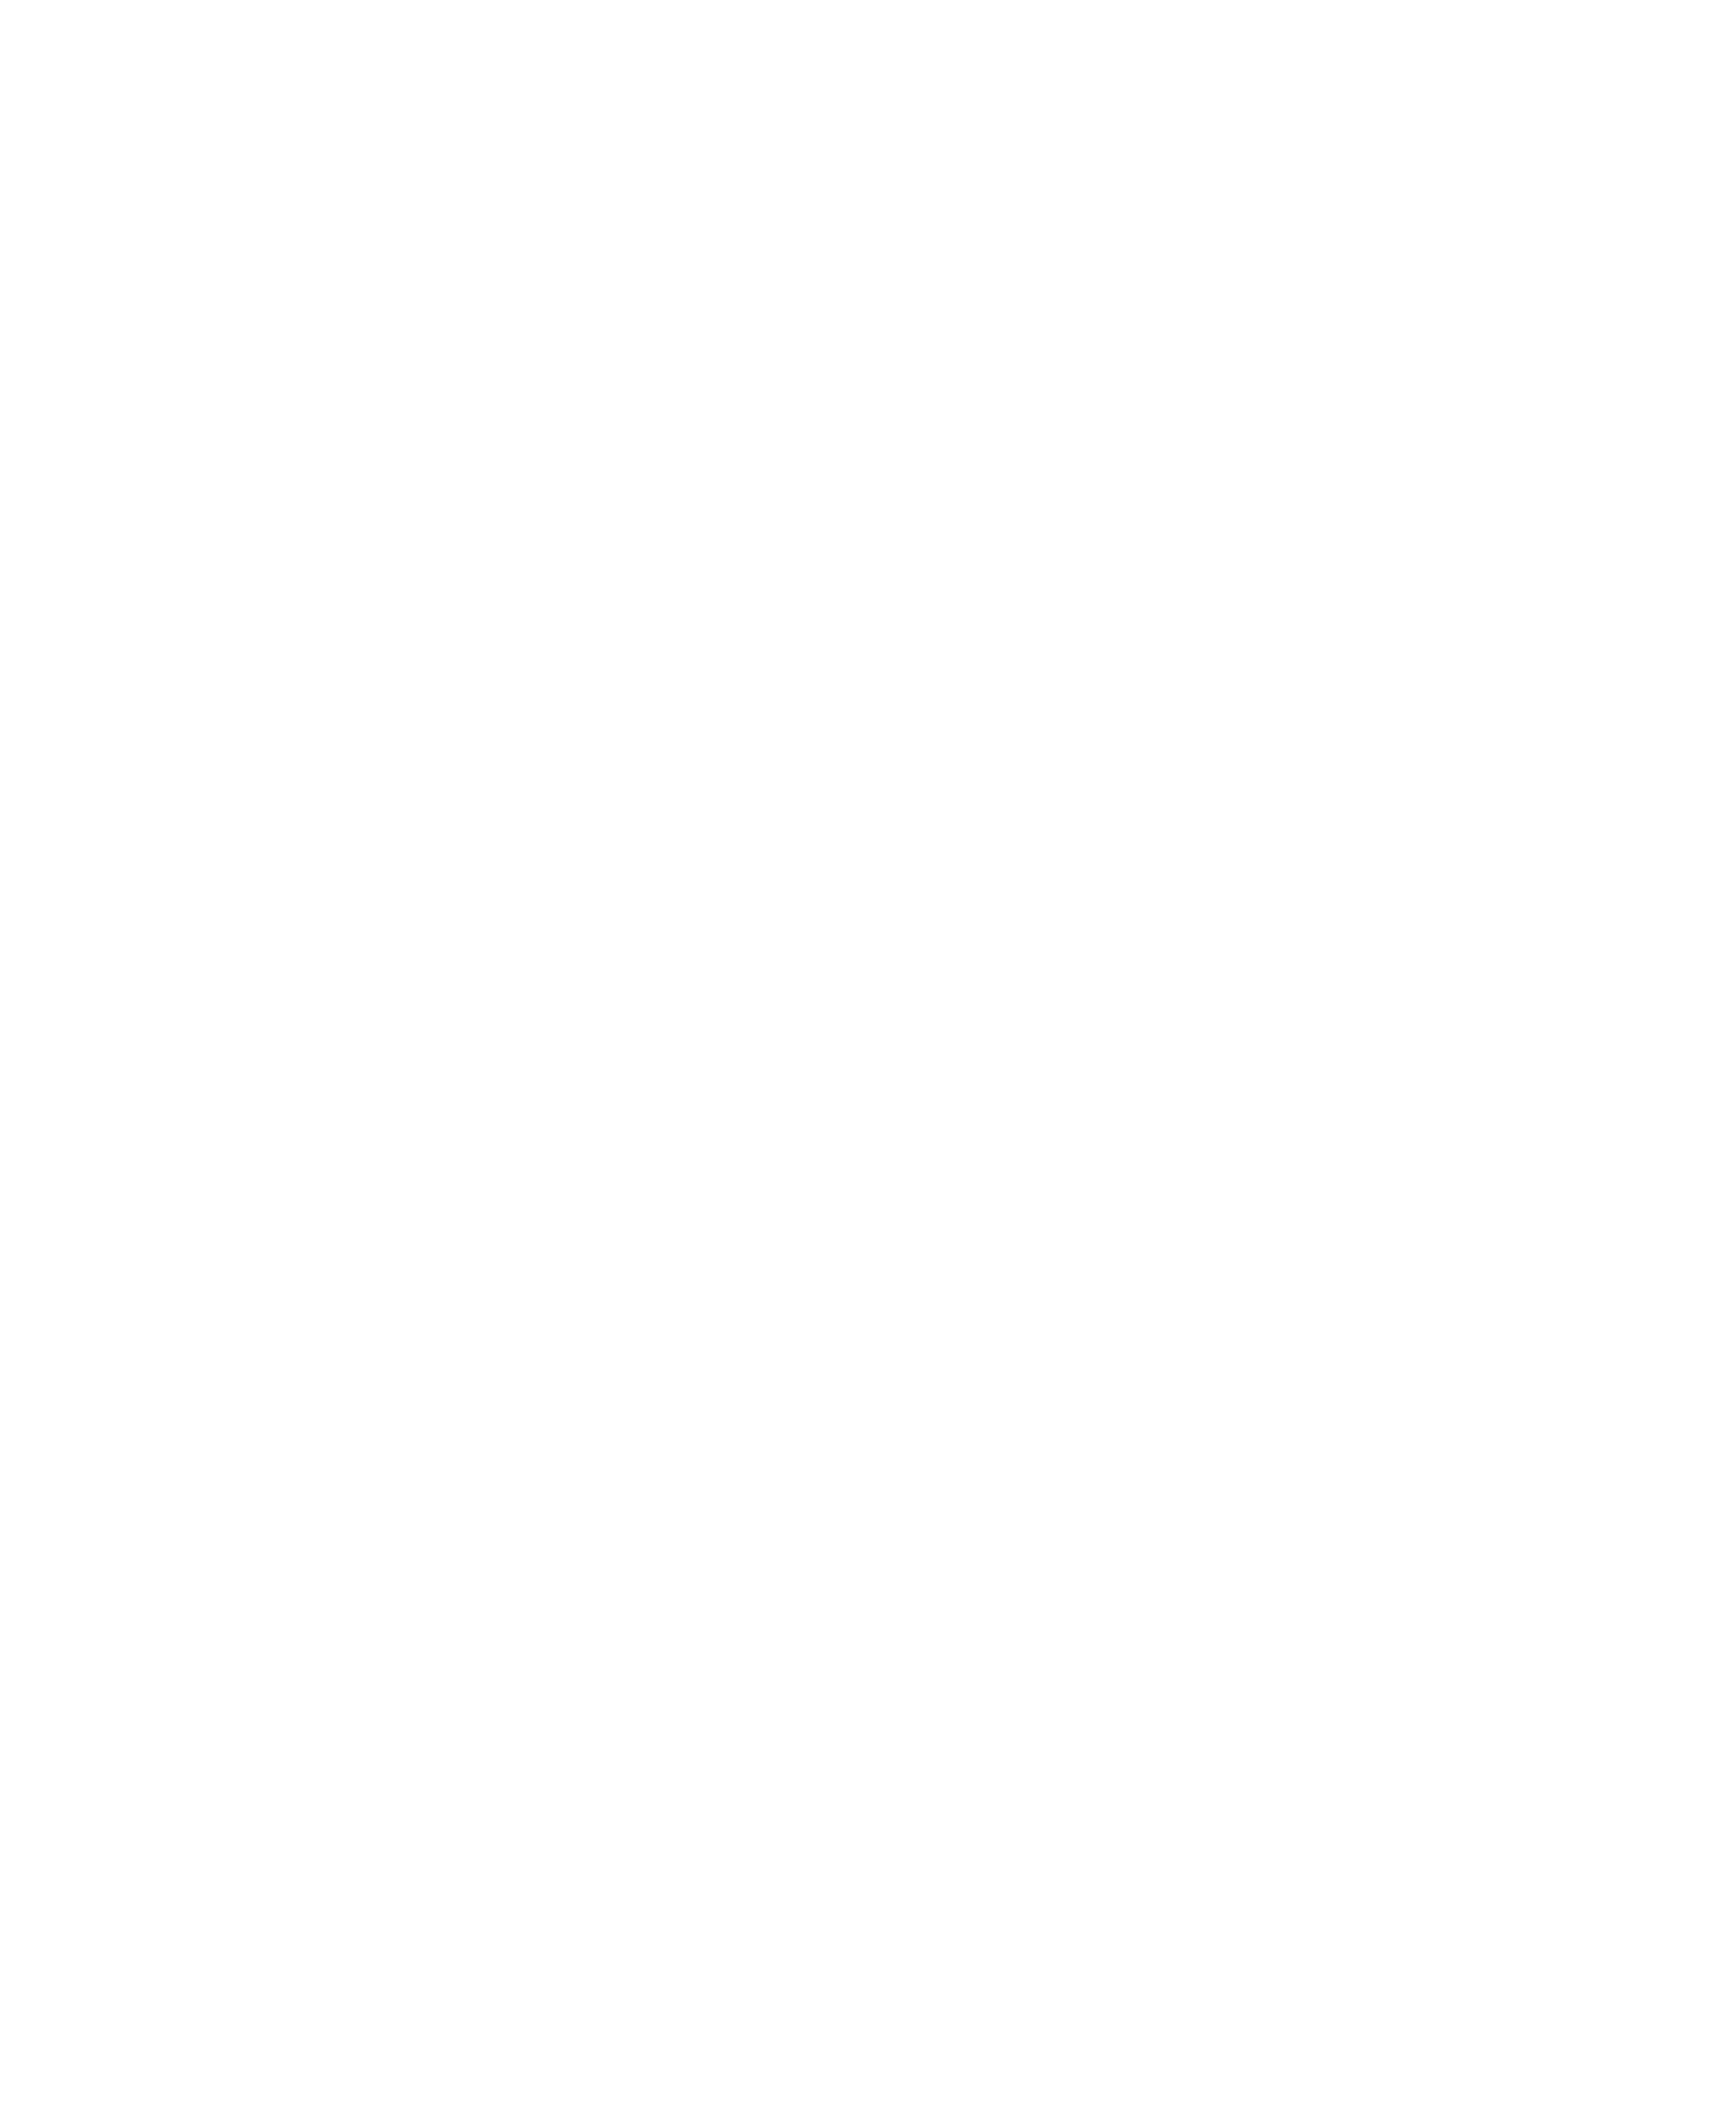 Essex Sword